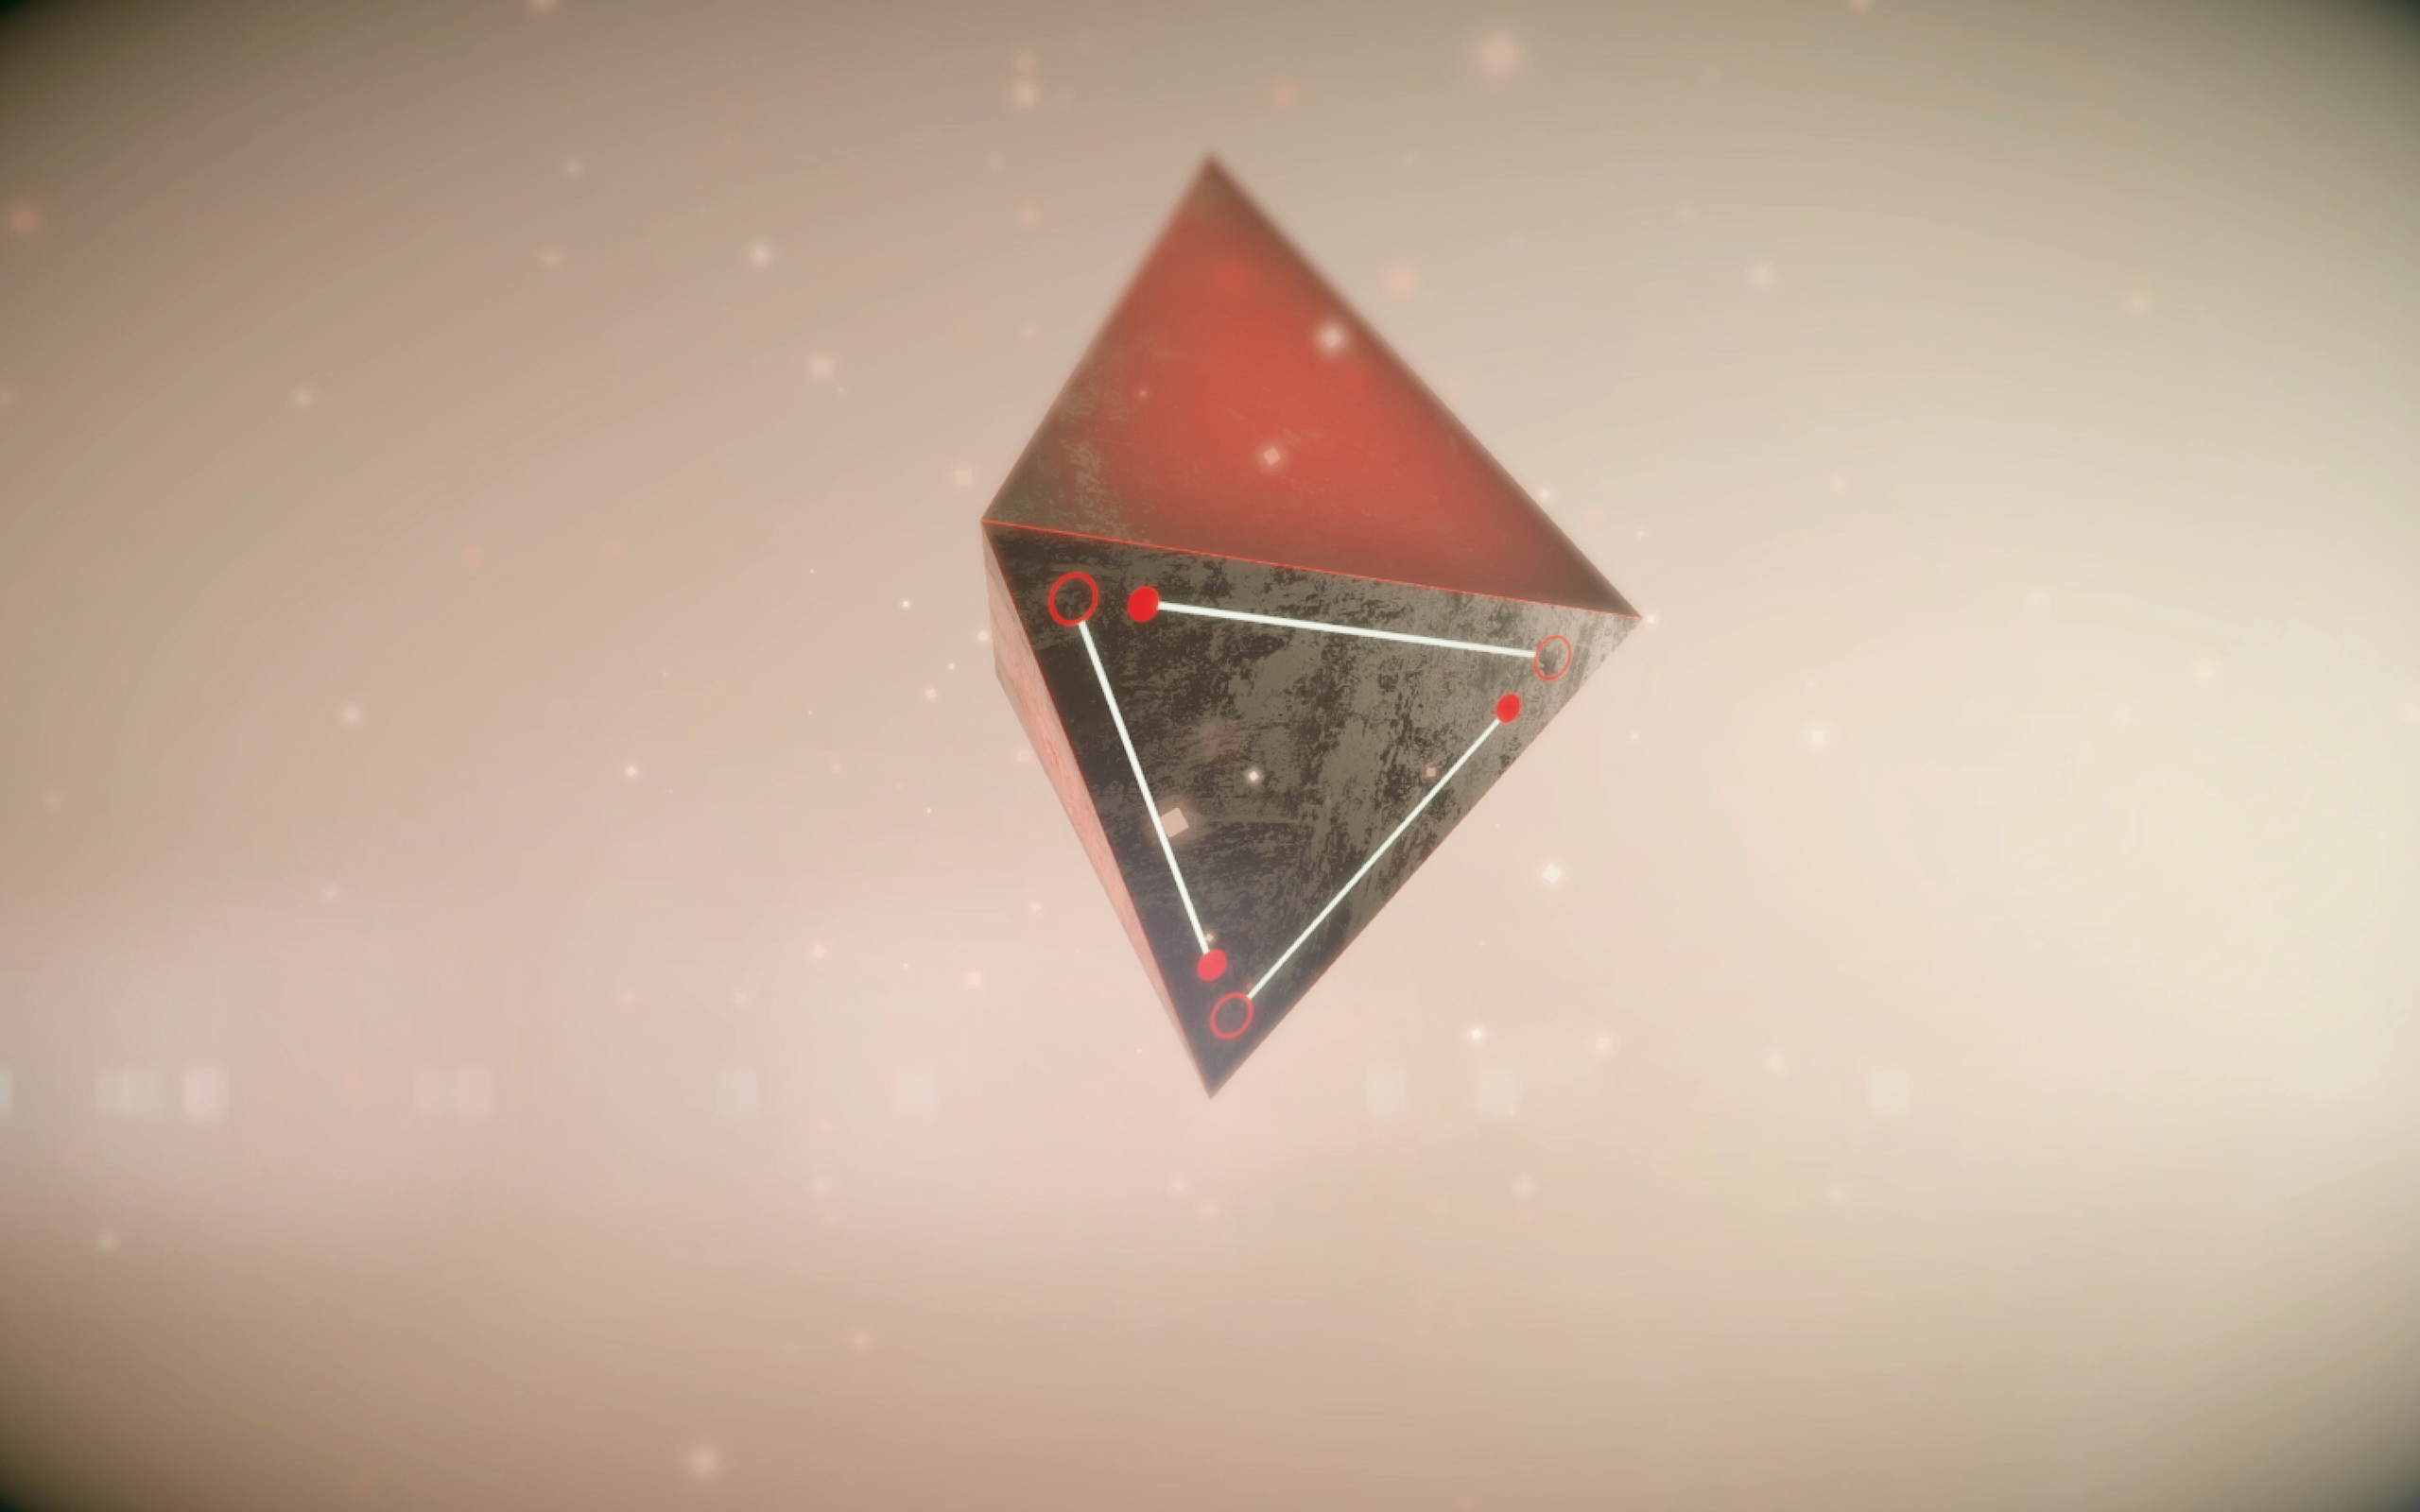 _PRISM 게임 스크린 샷